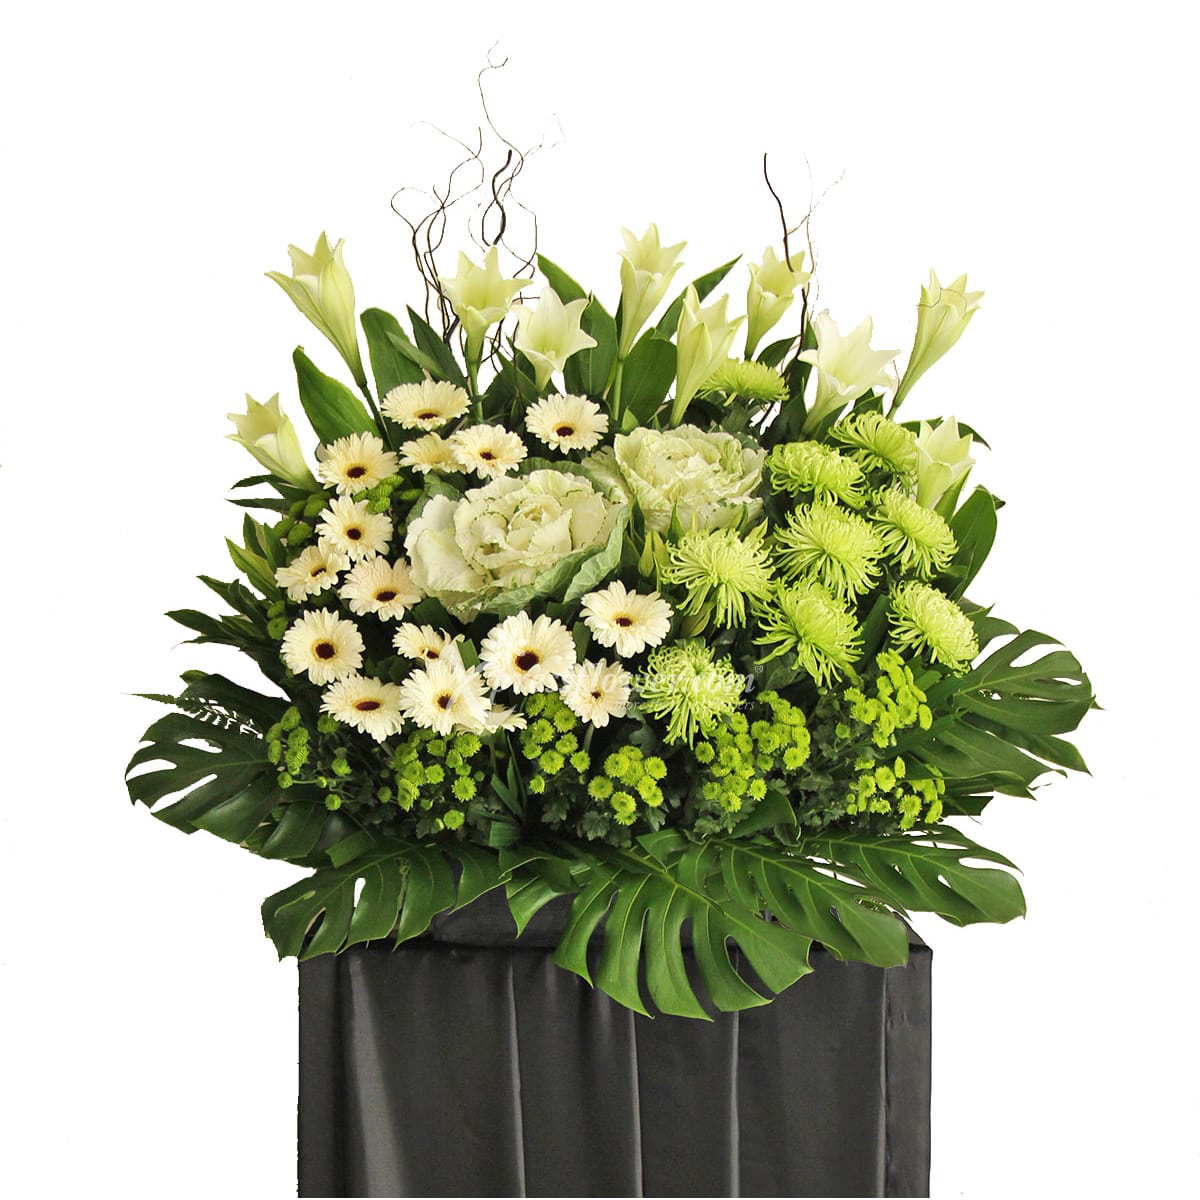 Enduring Beset (Funeral Condolence Flower Wreath)